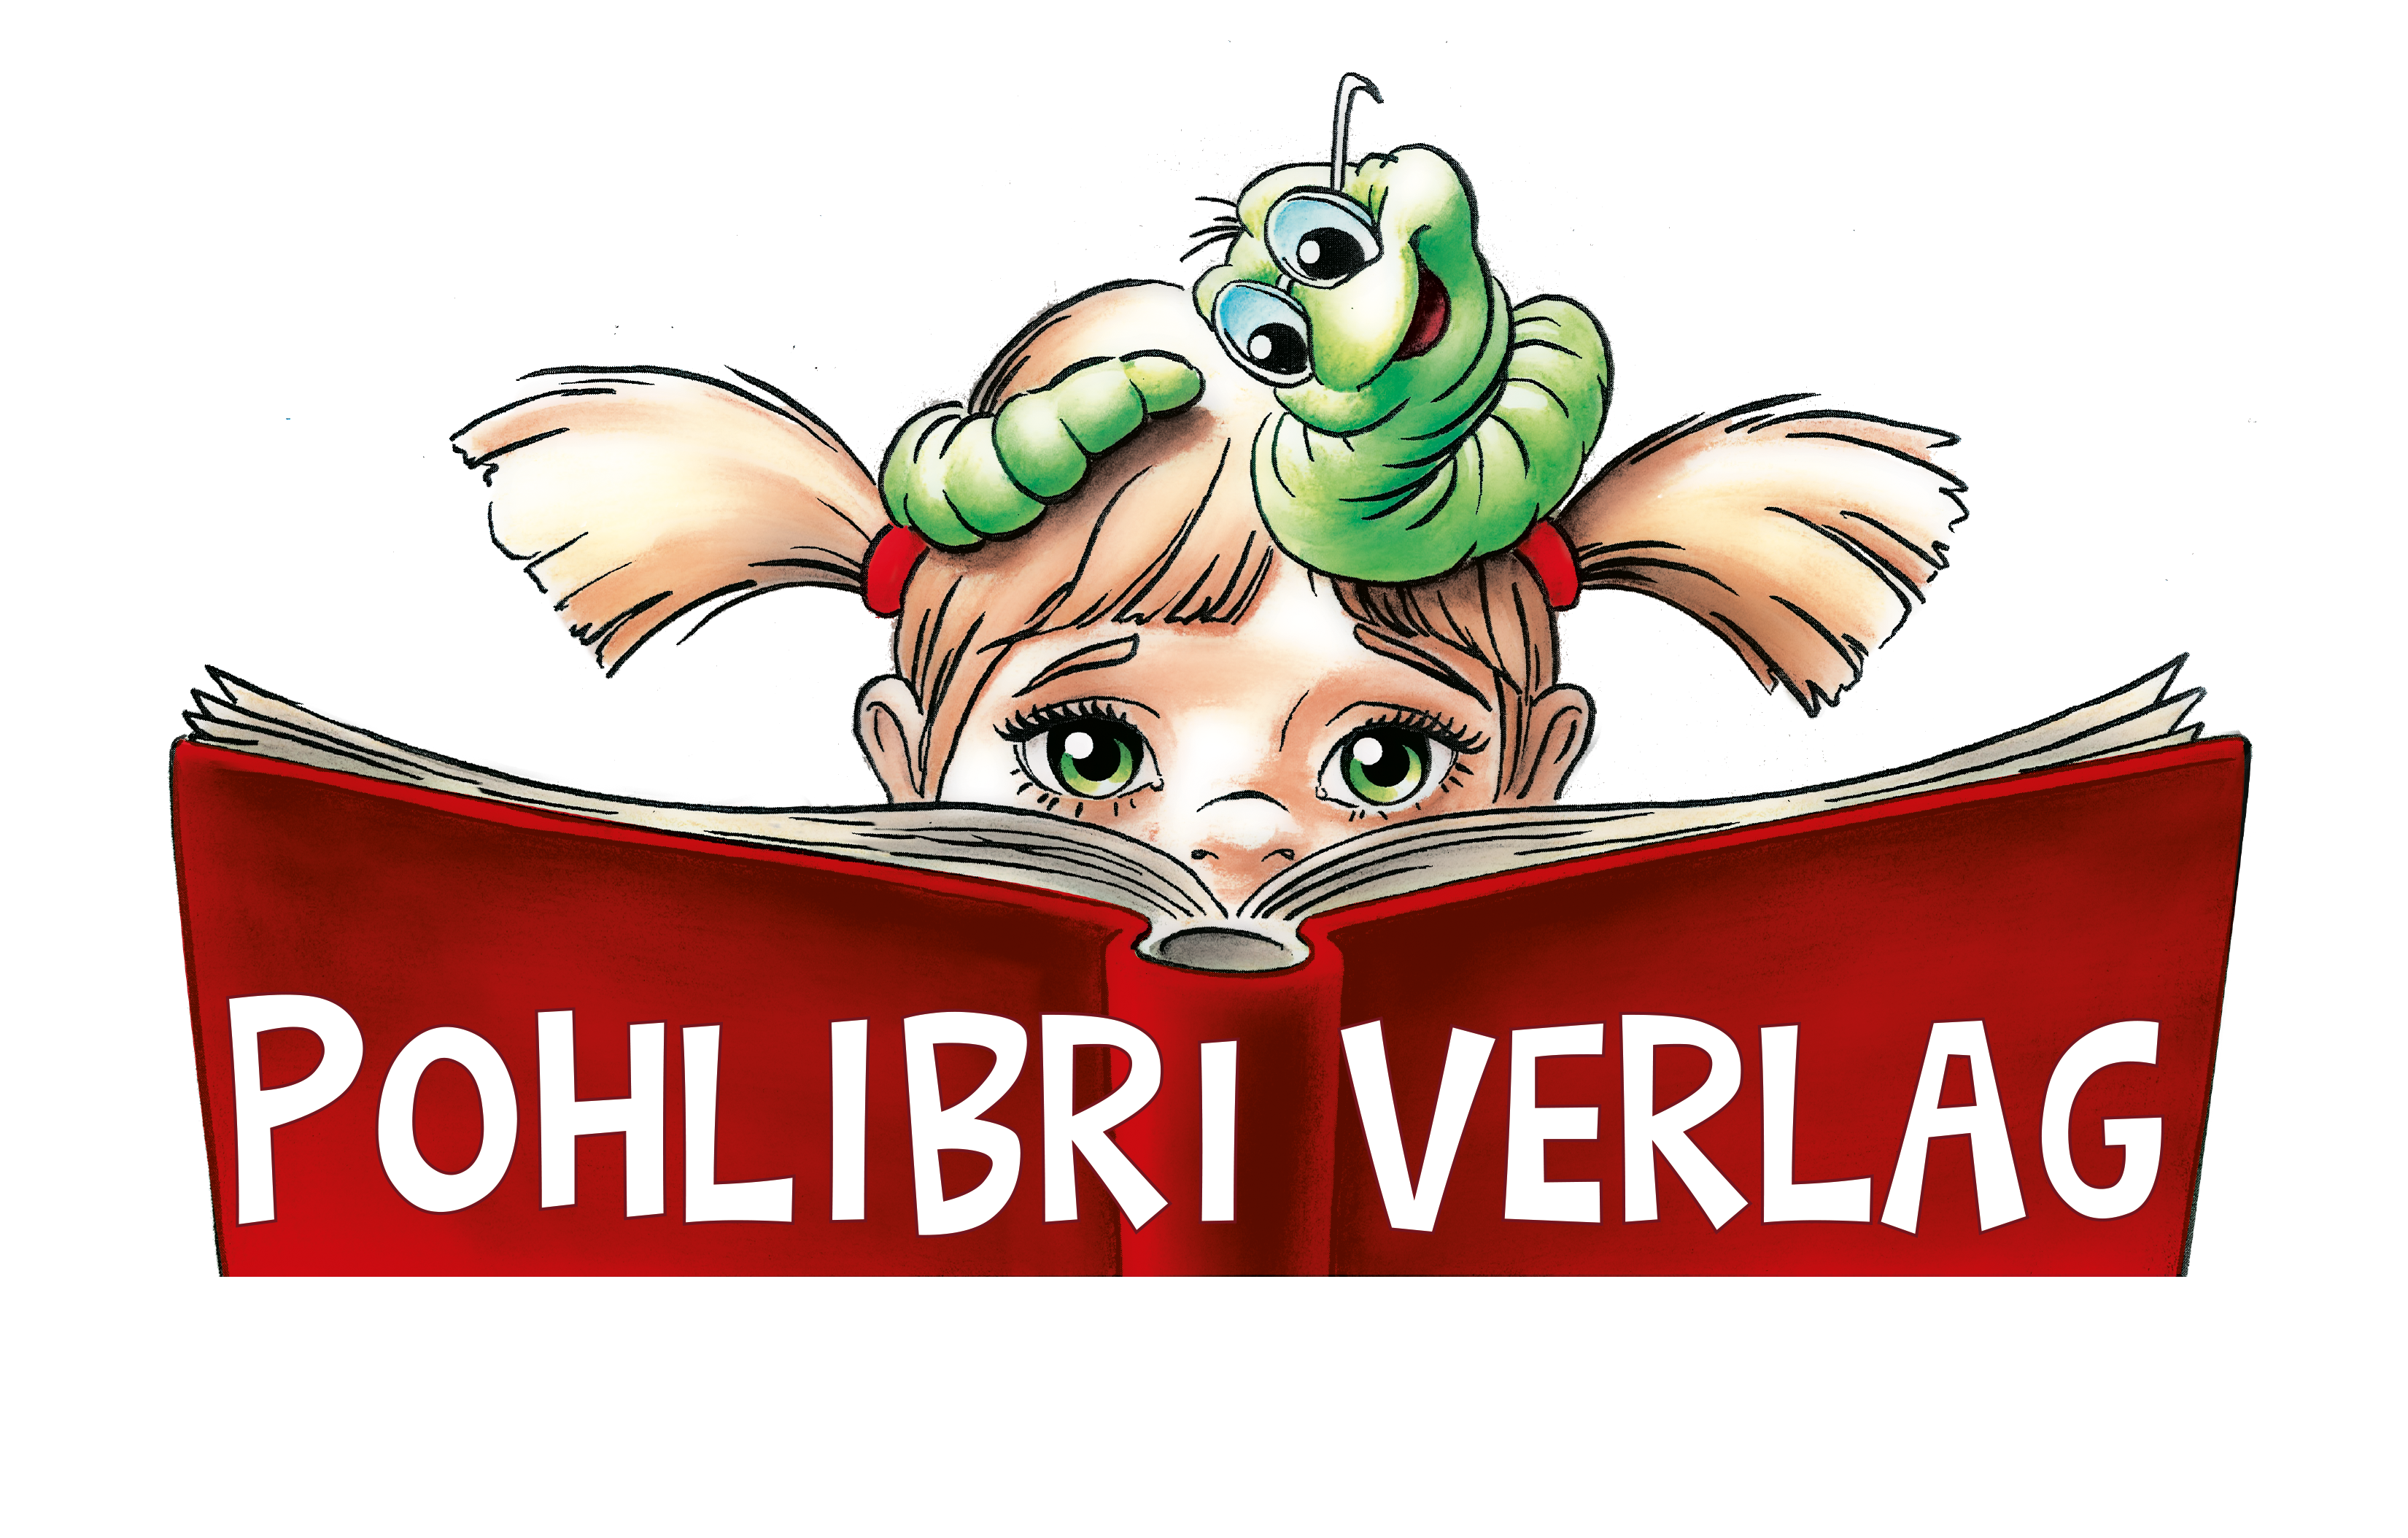 Pohlibri-Verlag